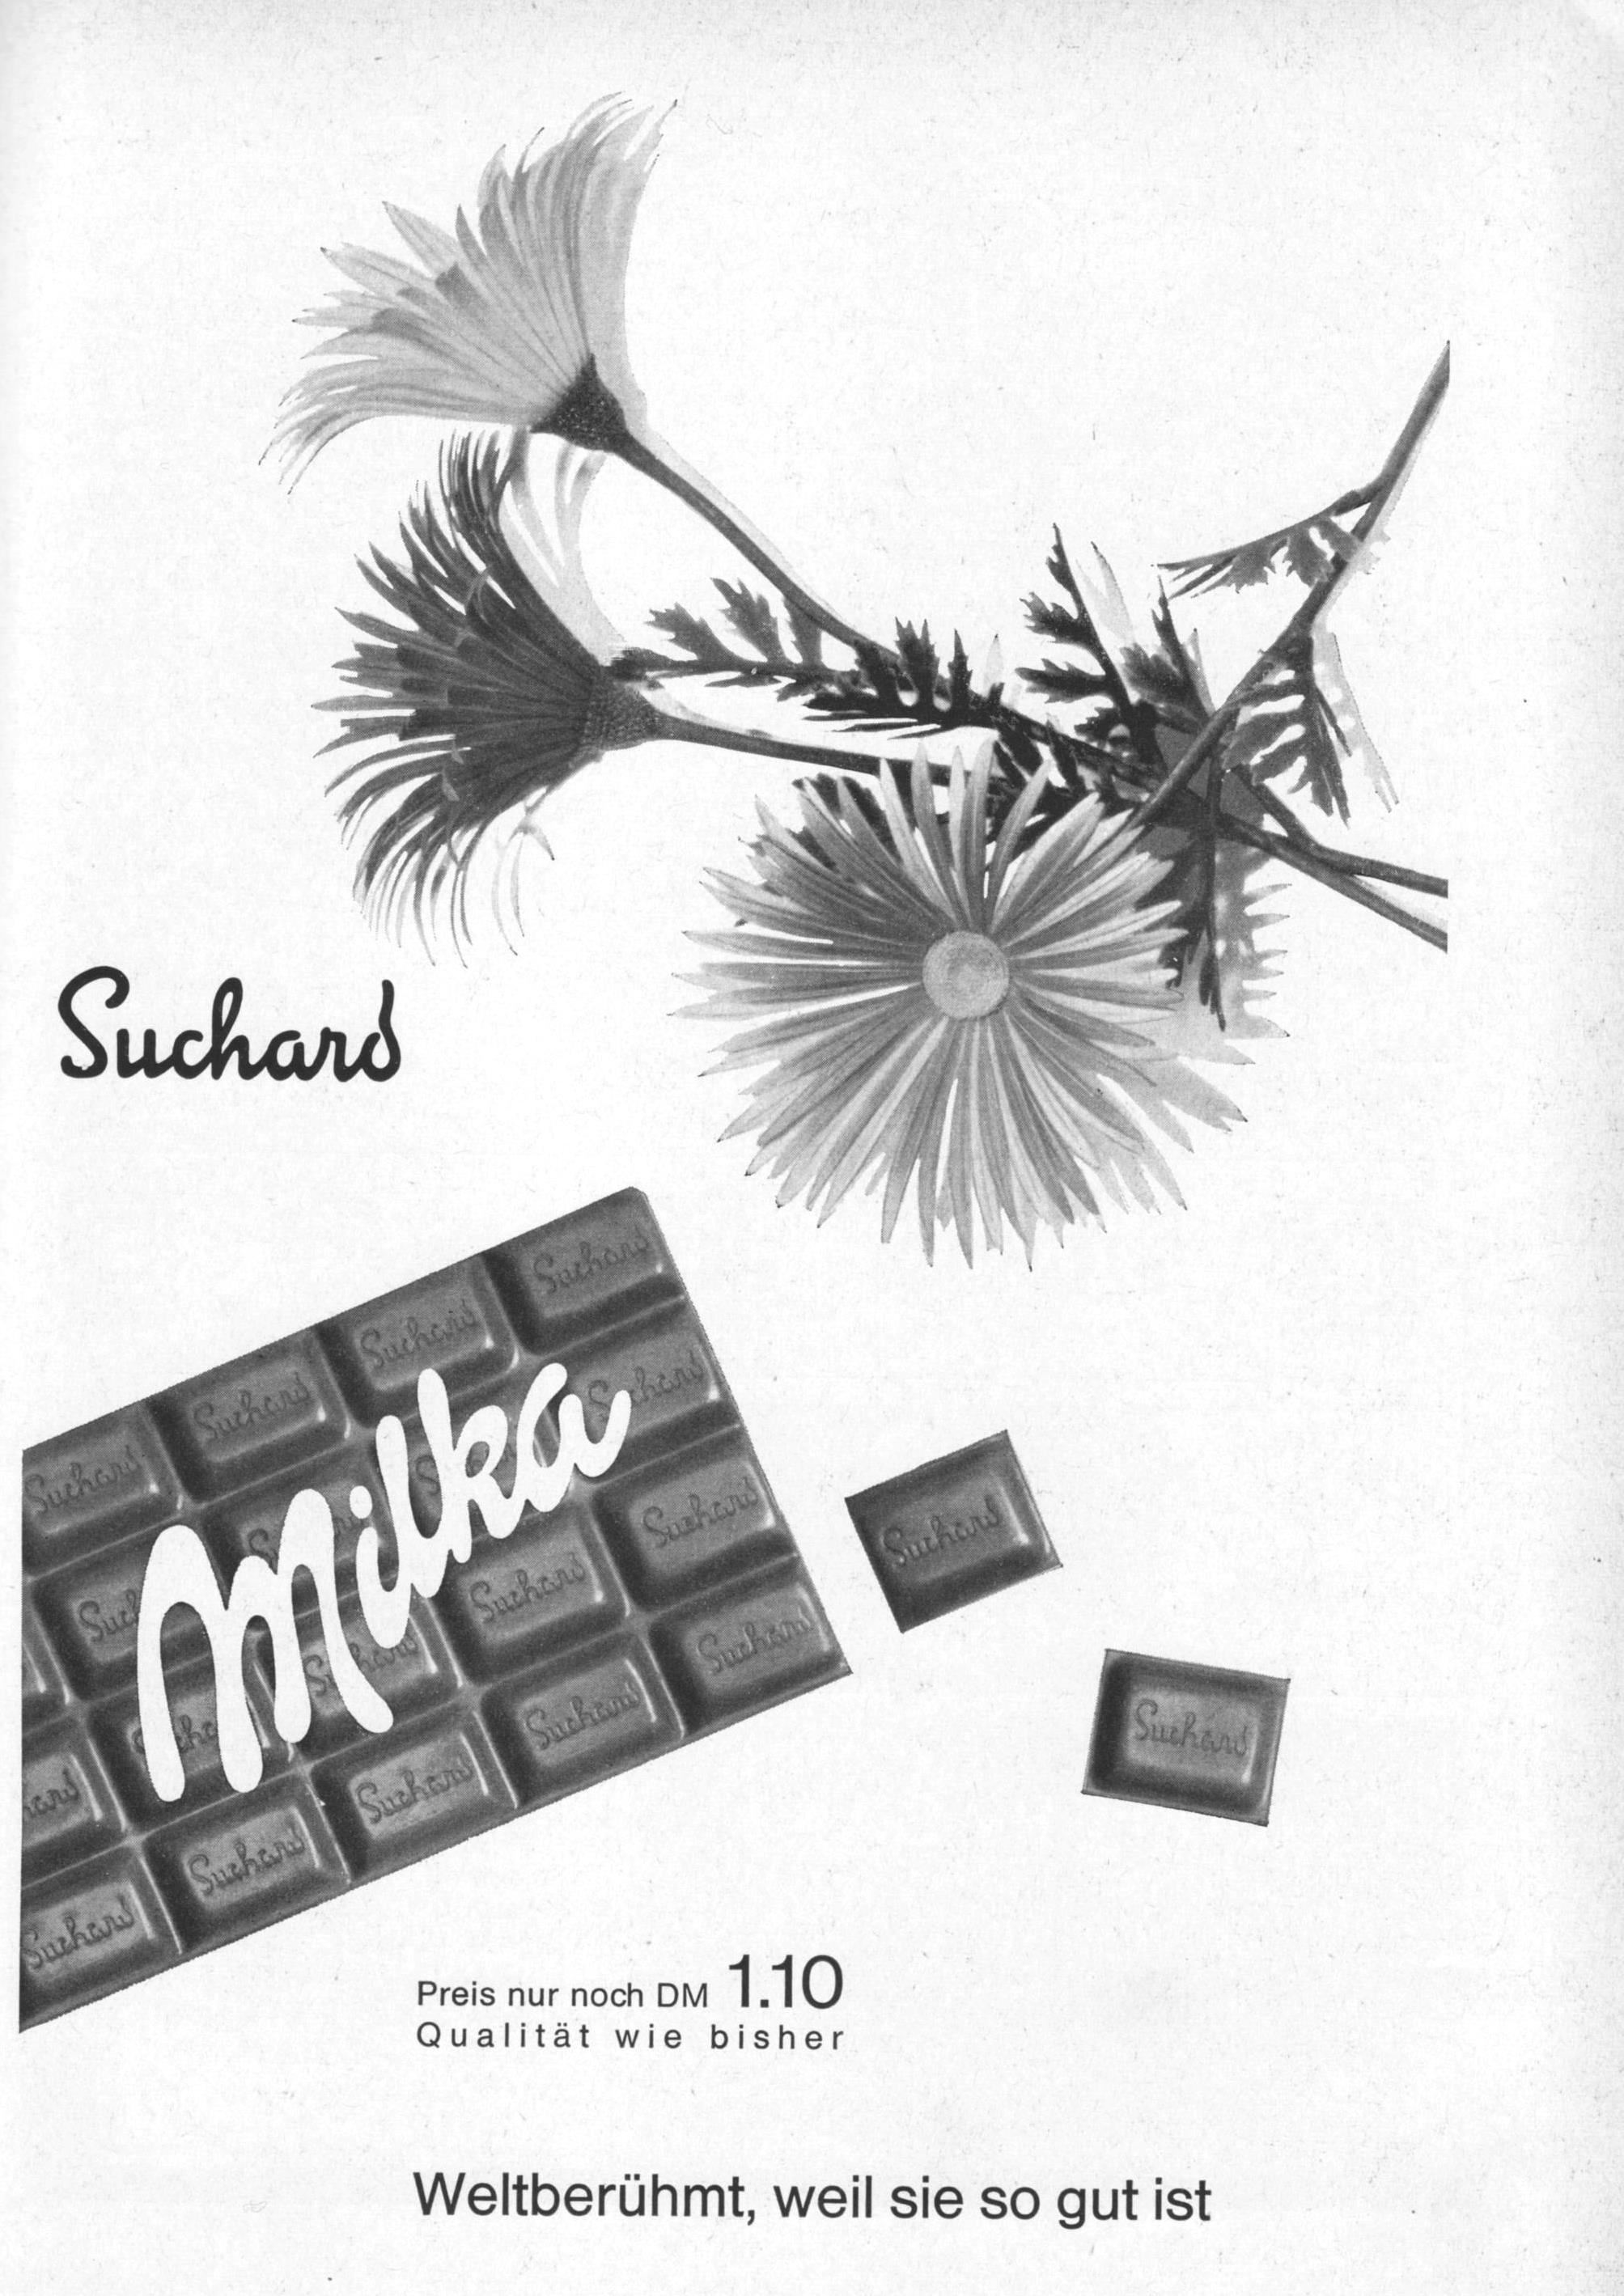 Milka 1962 1.jpg